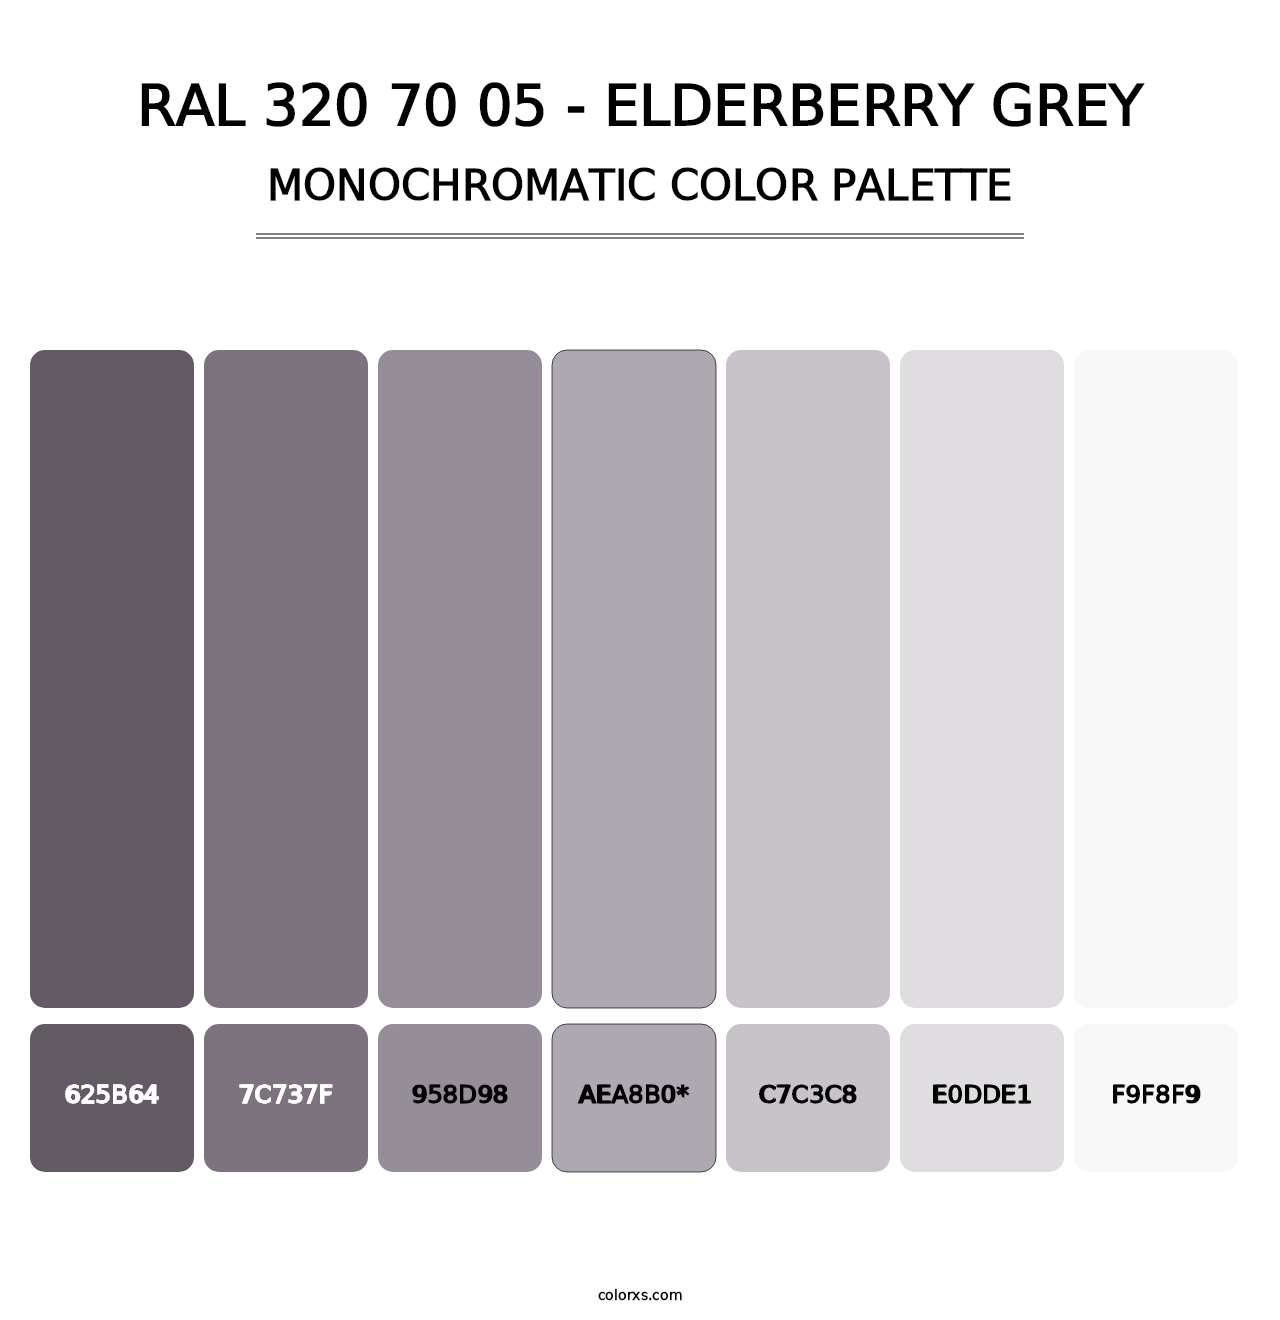 RAL 320 70 05 - Elderberry Grey - Monochromatic Color Palette